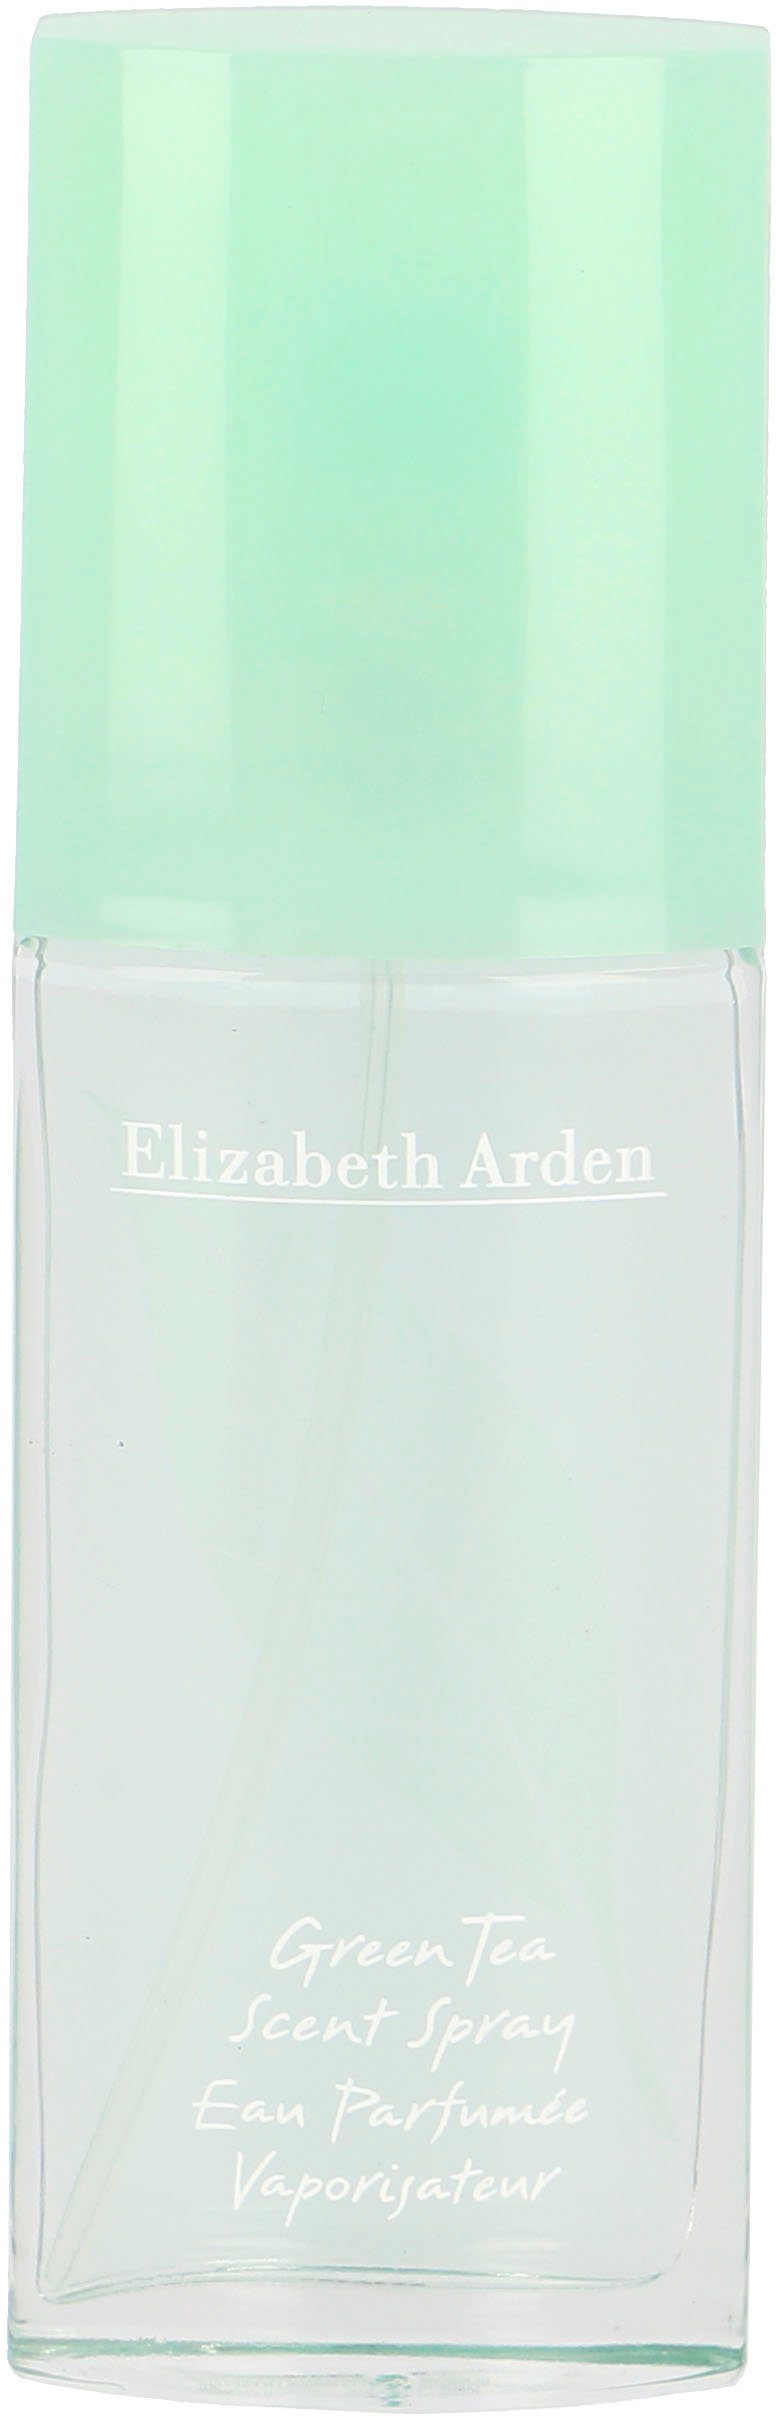 Elizabeth Arden Green Tea Toilette de Eau